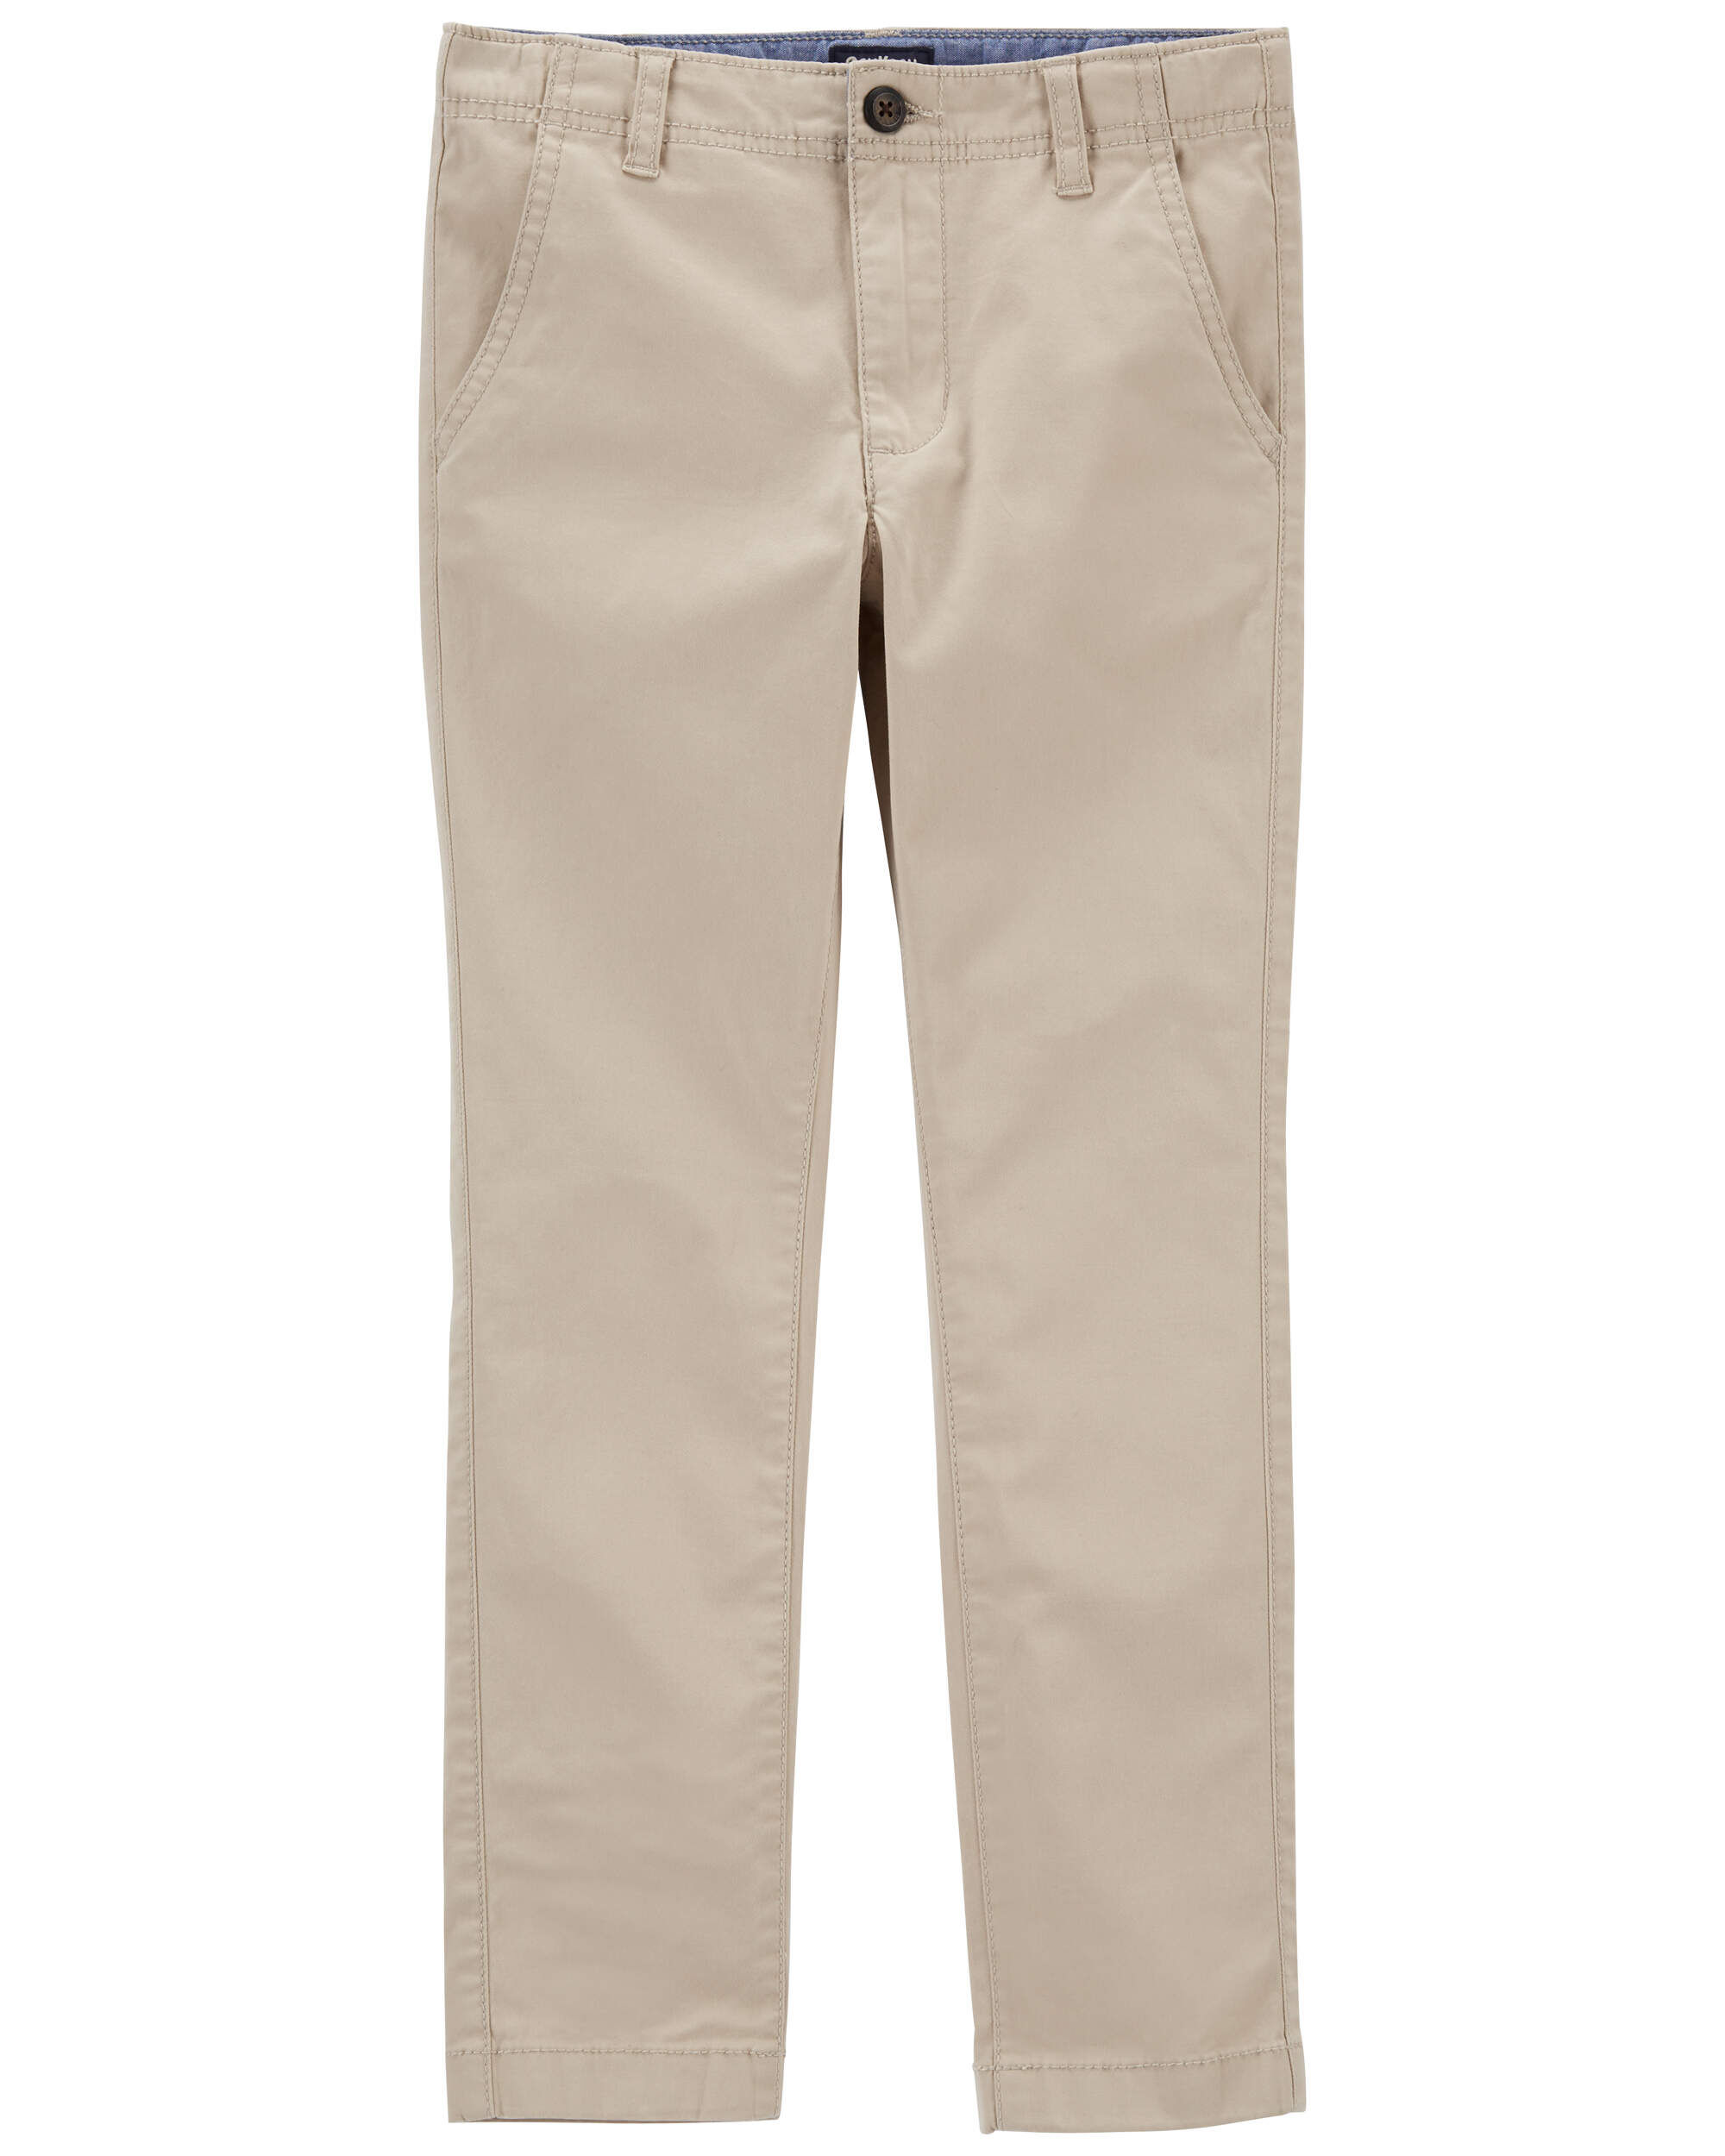 100% Cotton Khaki Chino Trousers with Orange Hi-Vis Tape – Quipco BW